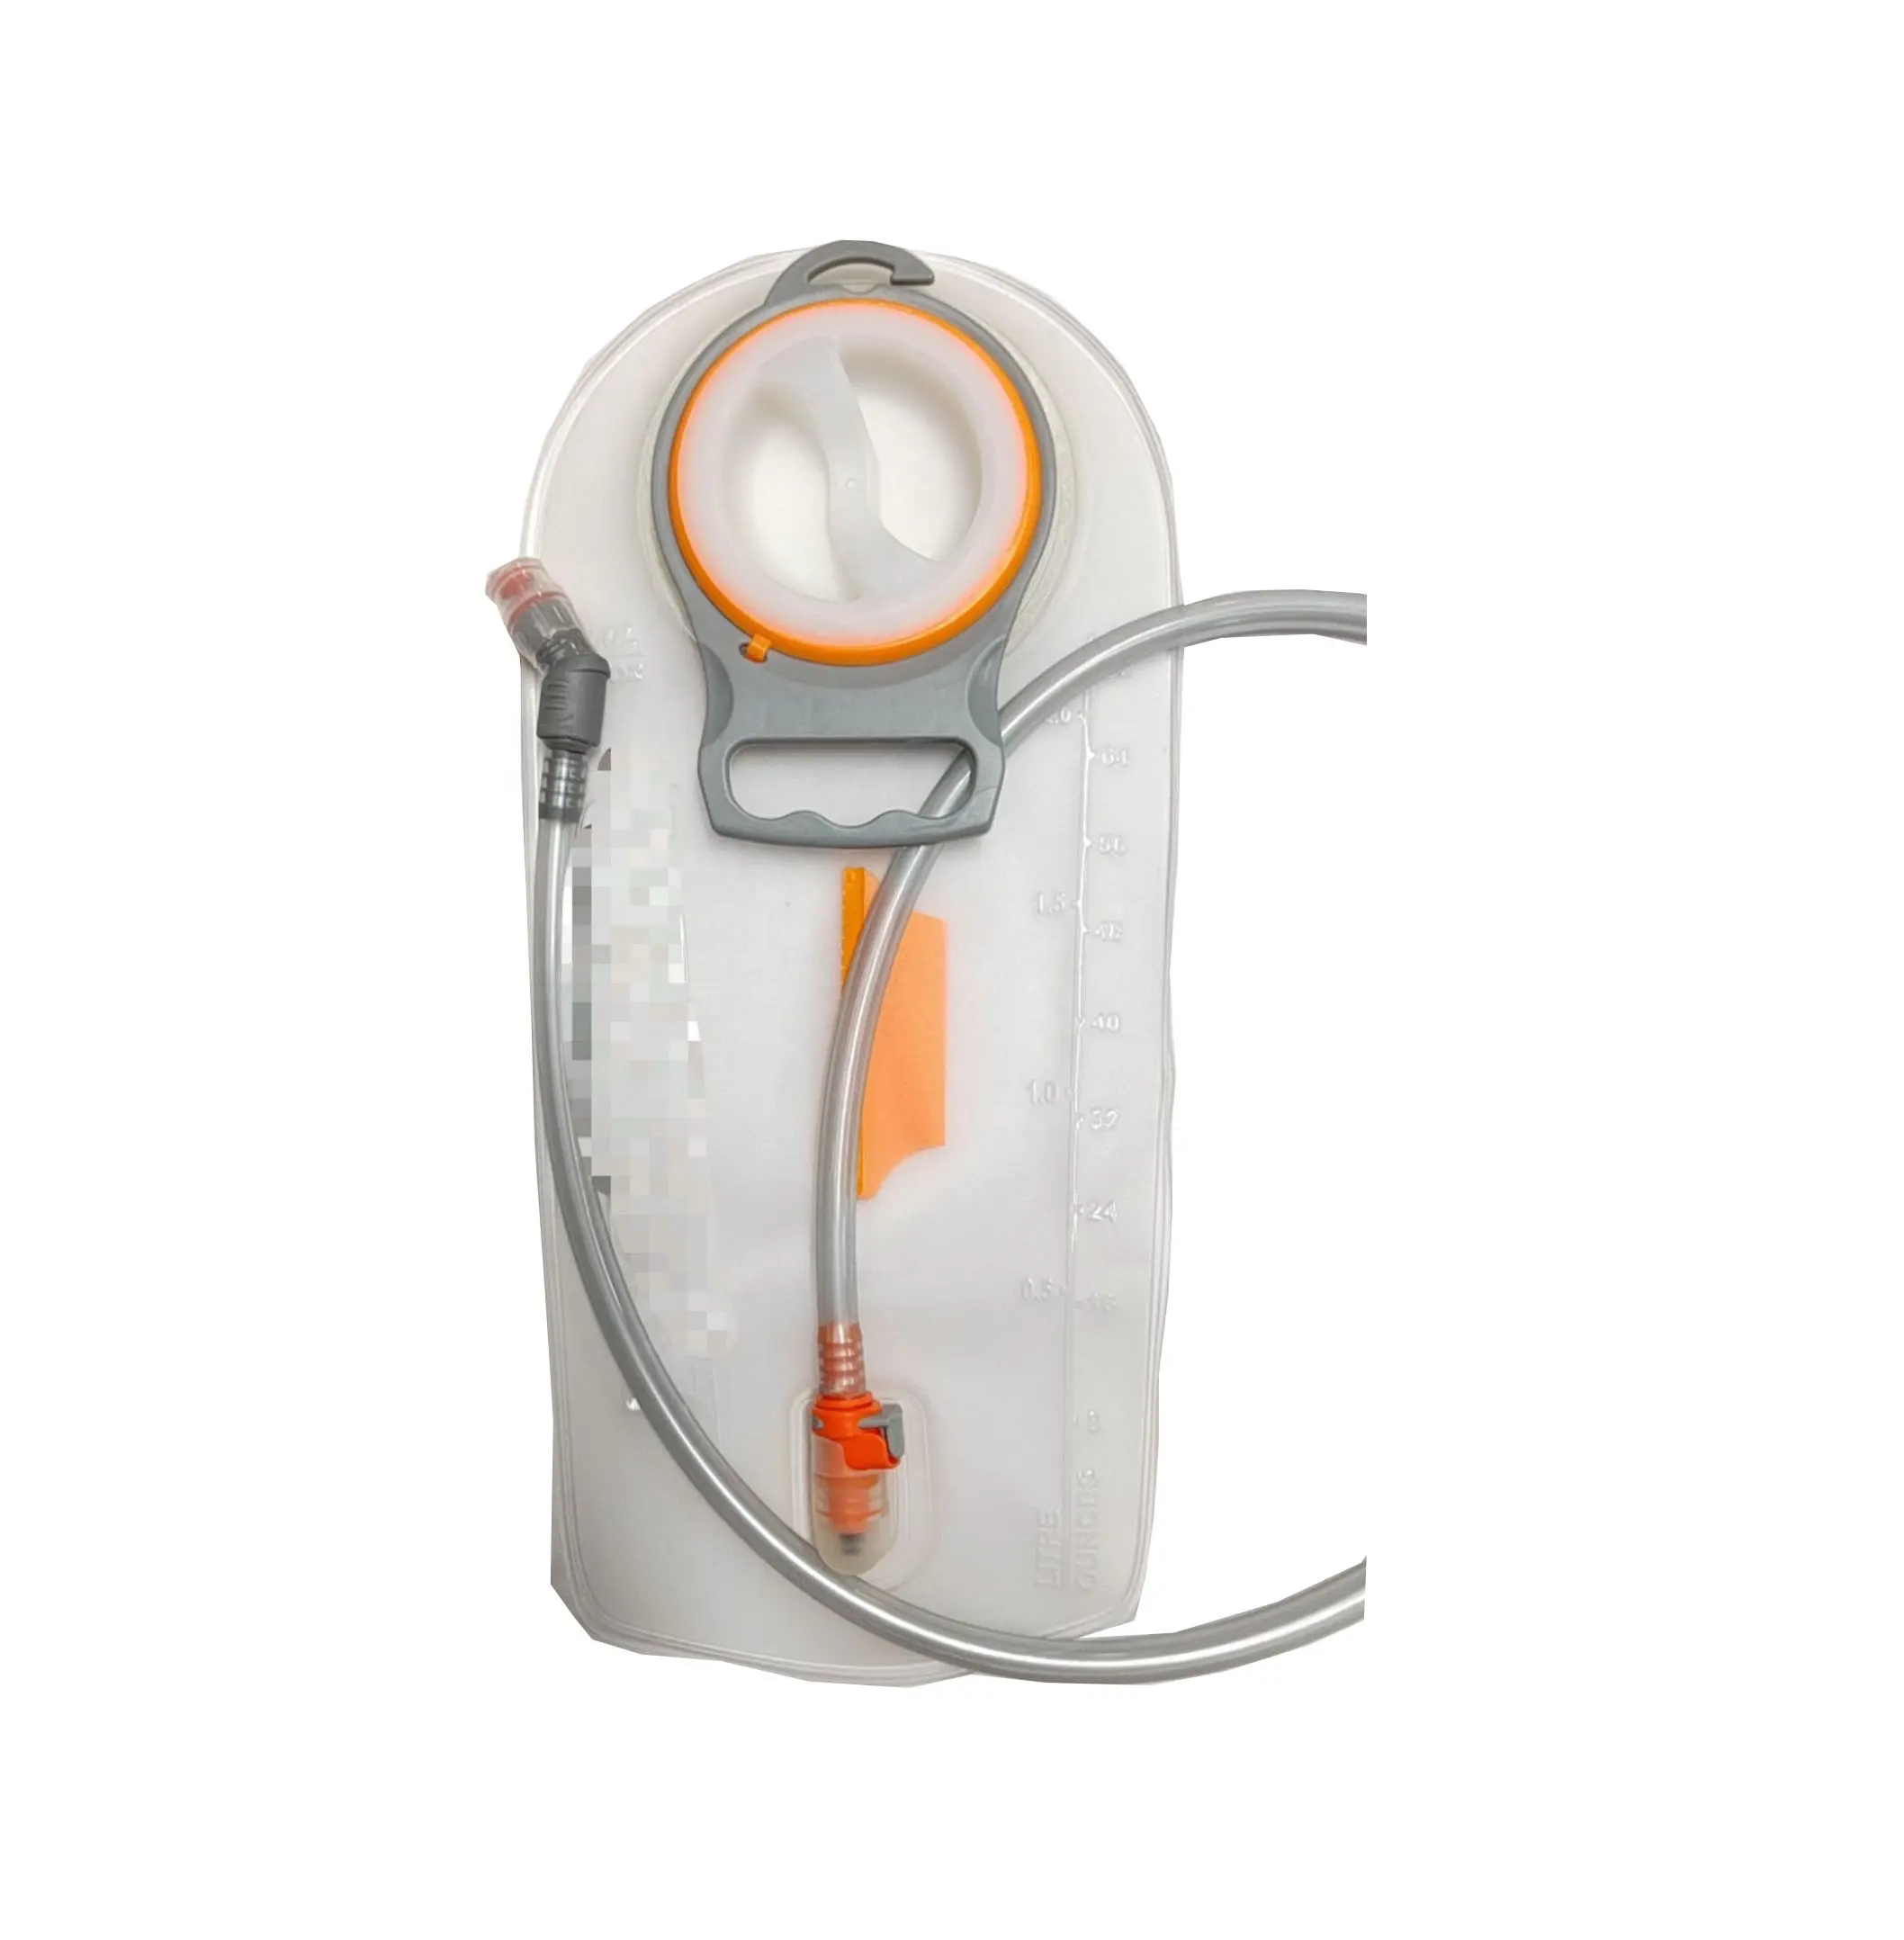 2022 popular style TPU 2.0 hydration bladder,orange and white color water bladder